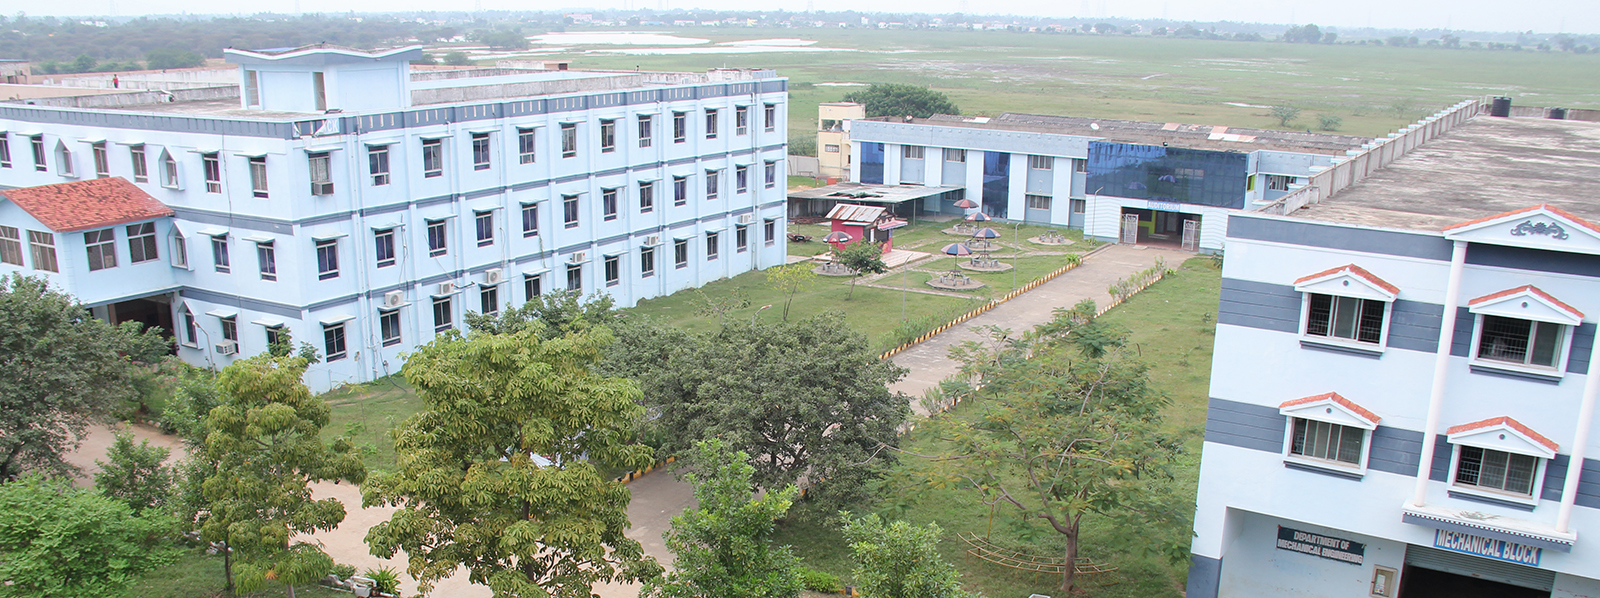 Jaya Engineering College, Chennai Image